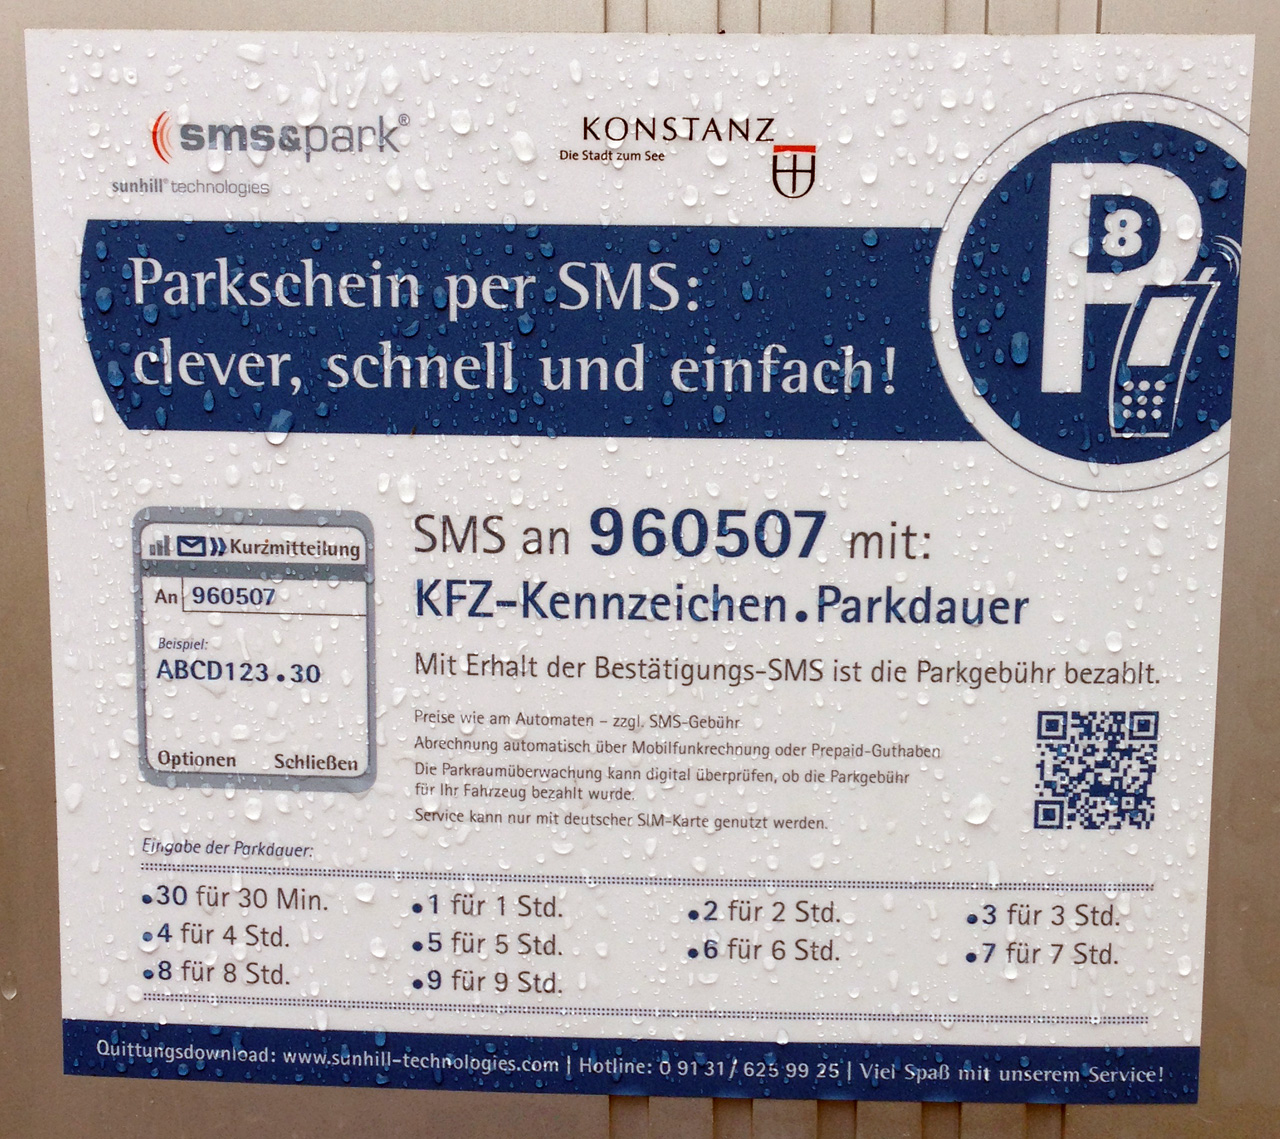 Howto sms&park Konstanz